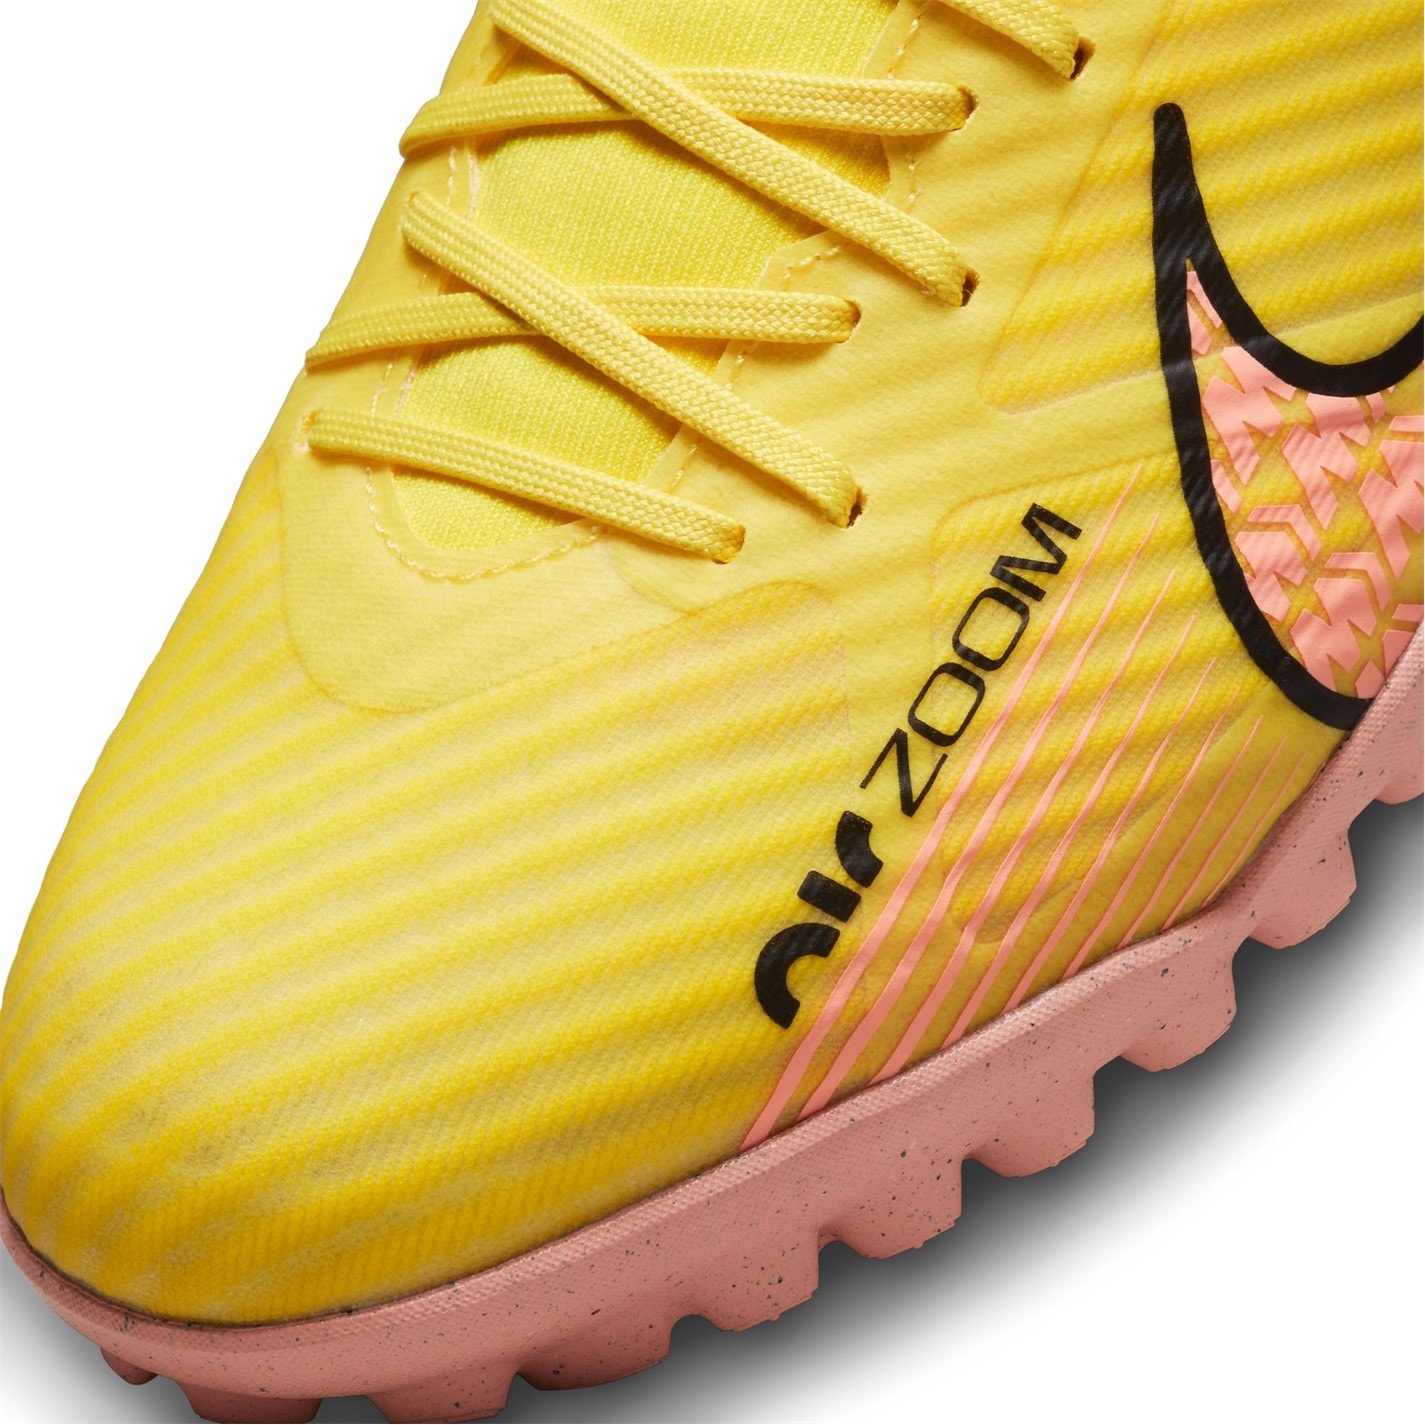 Adidasi Gazon Sintetic Nike Mercurial Superfly Academy DF galben portocaliu